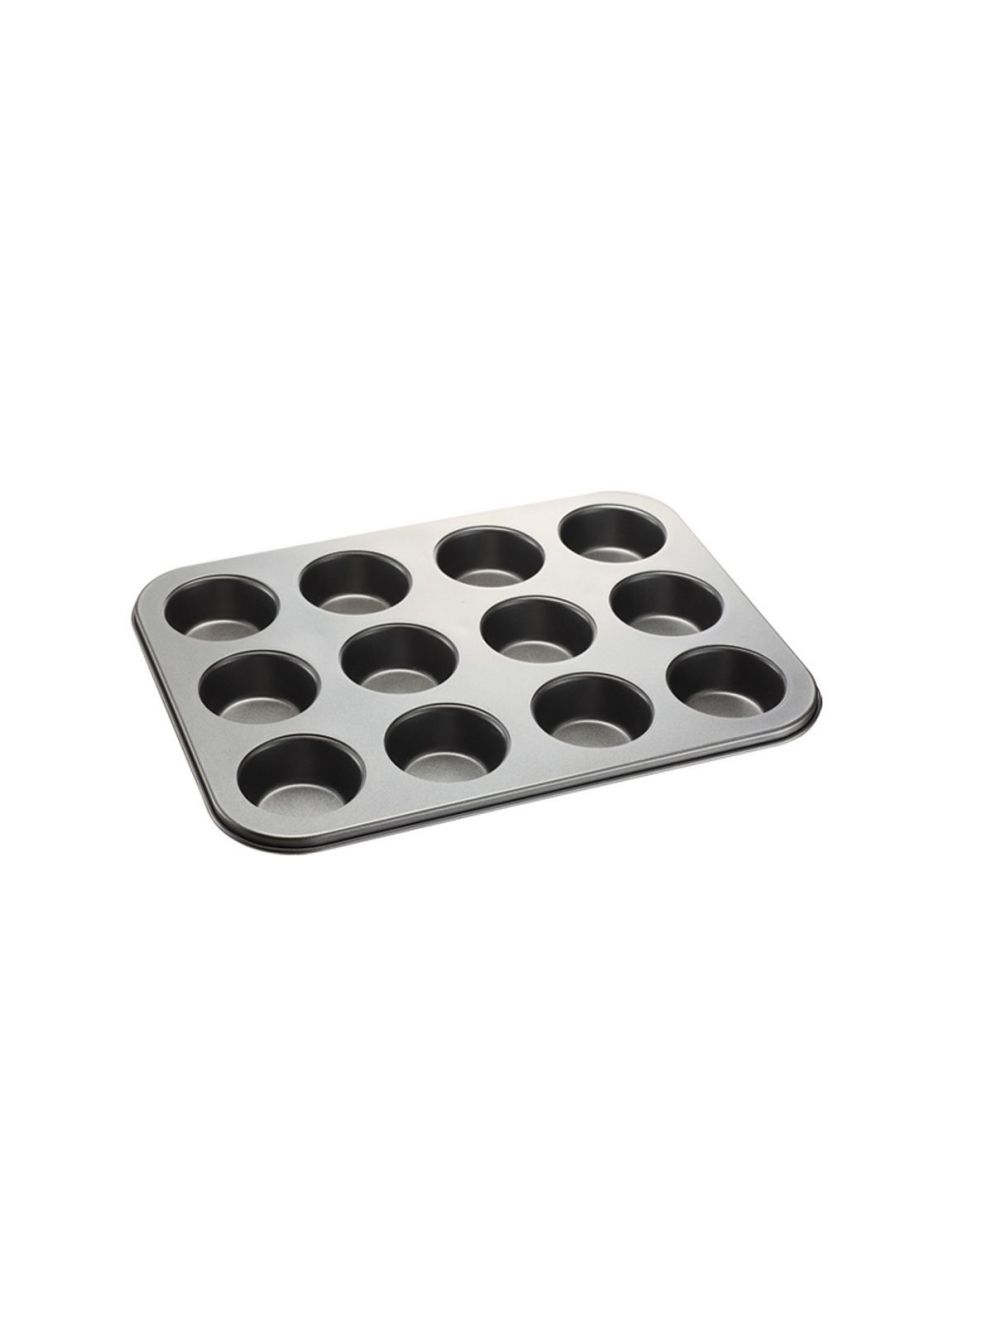 Blackstone 12-Cup Nonstick Muffin Tray Grey-HLFBK07012